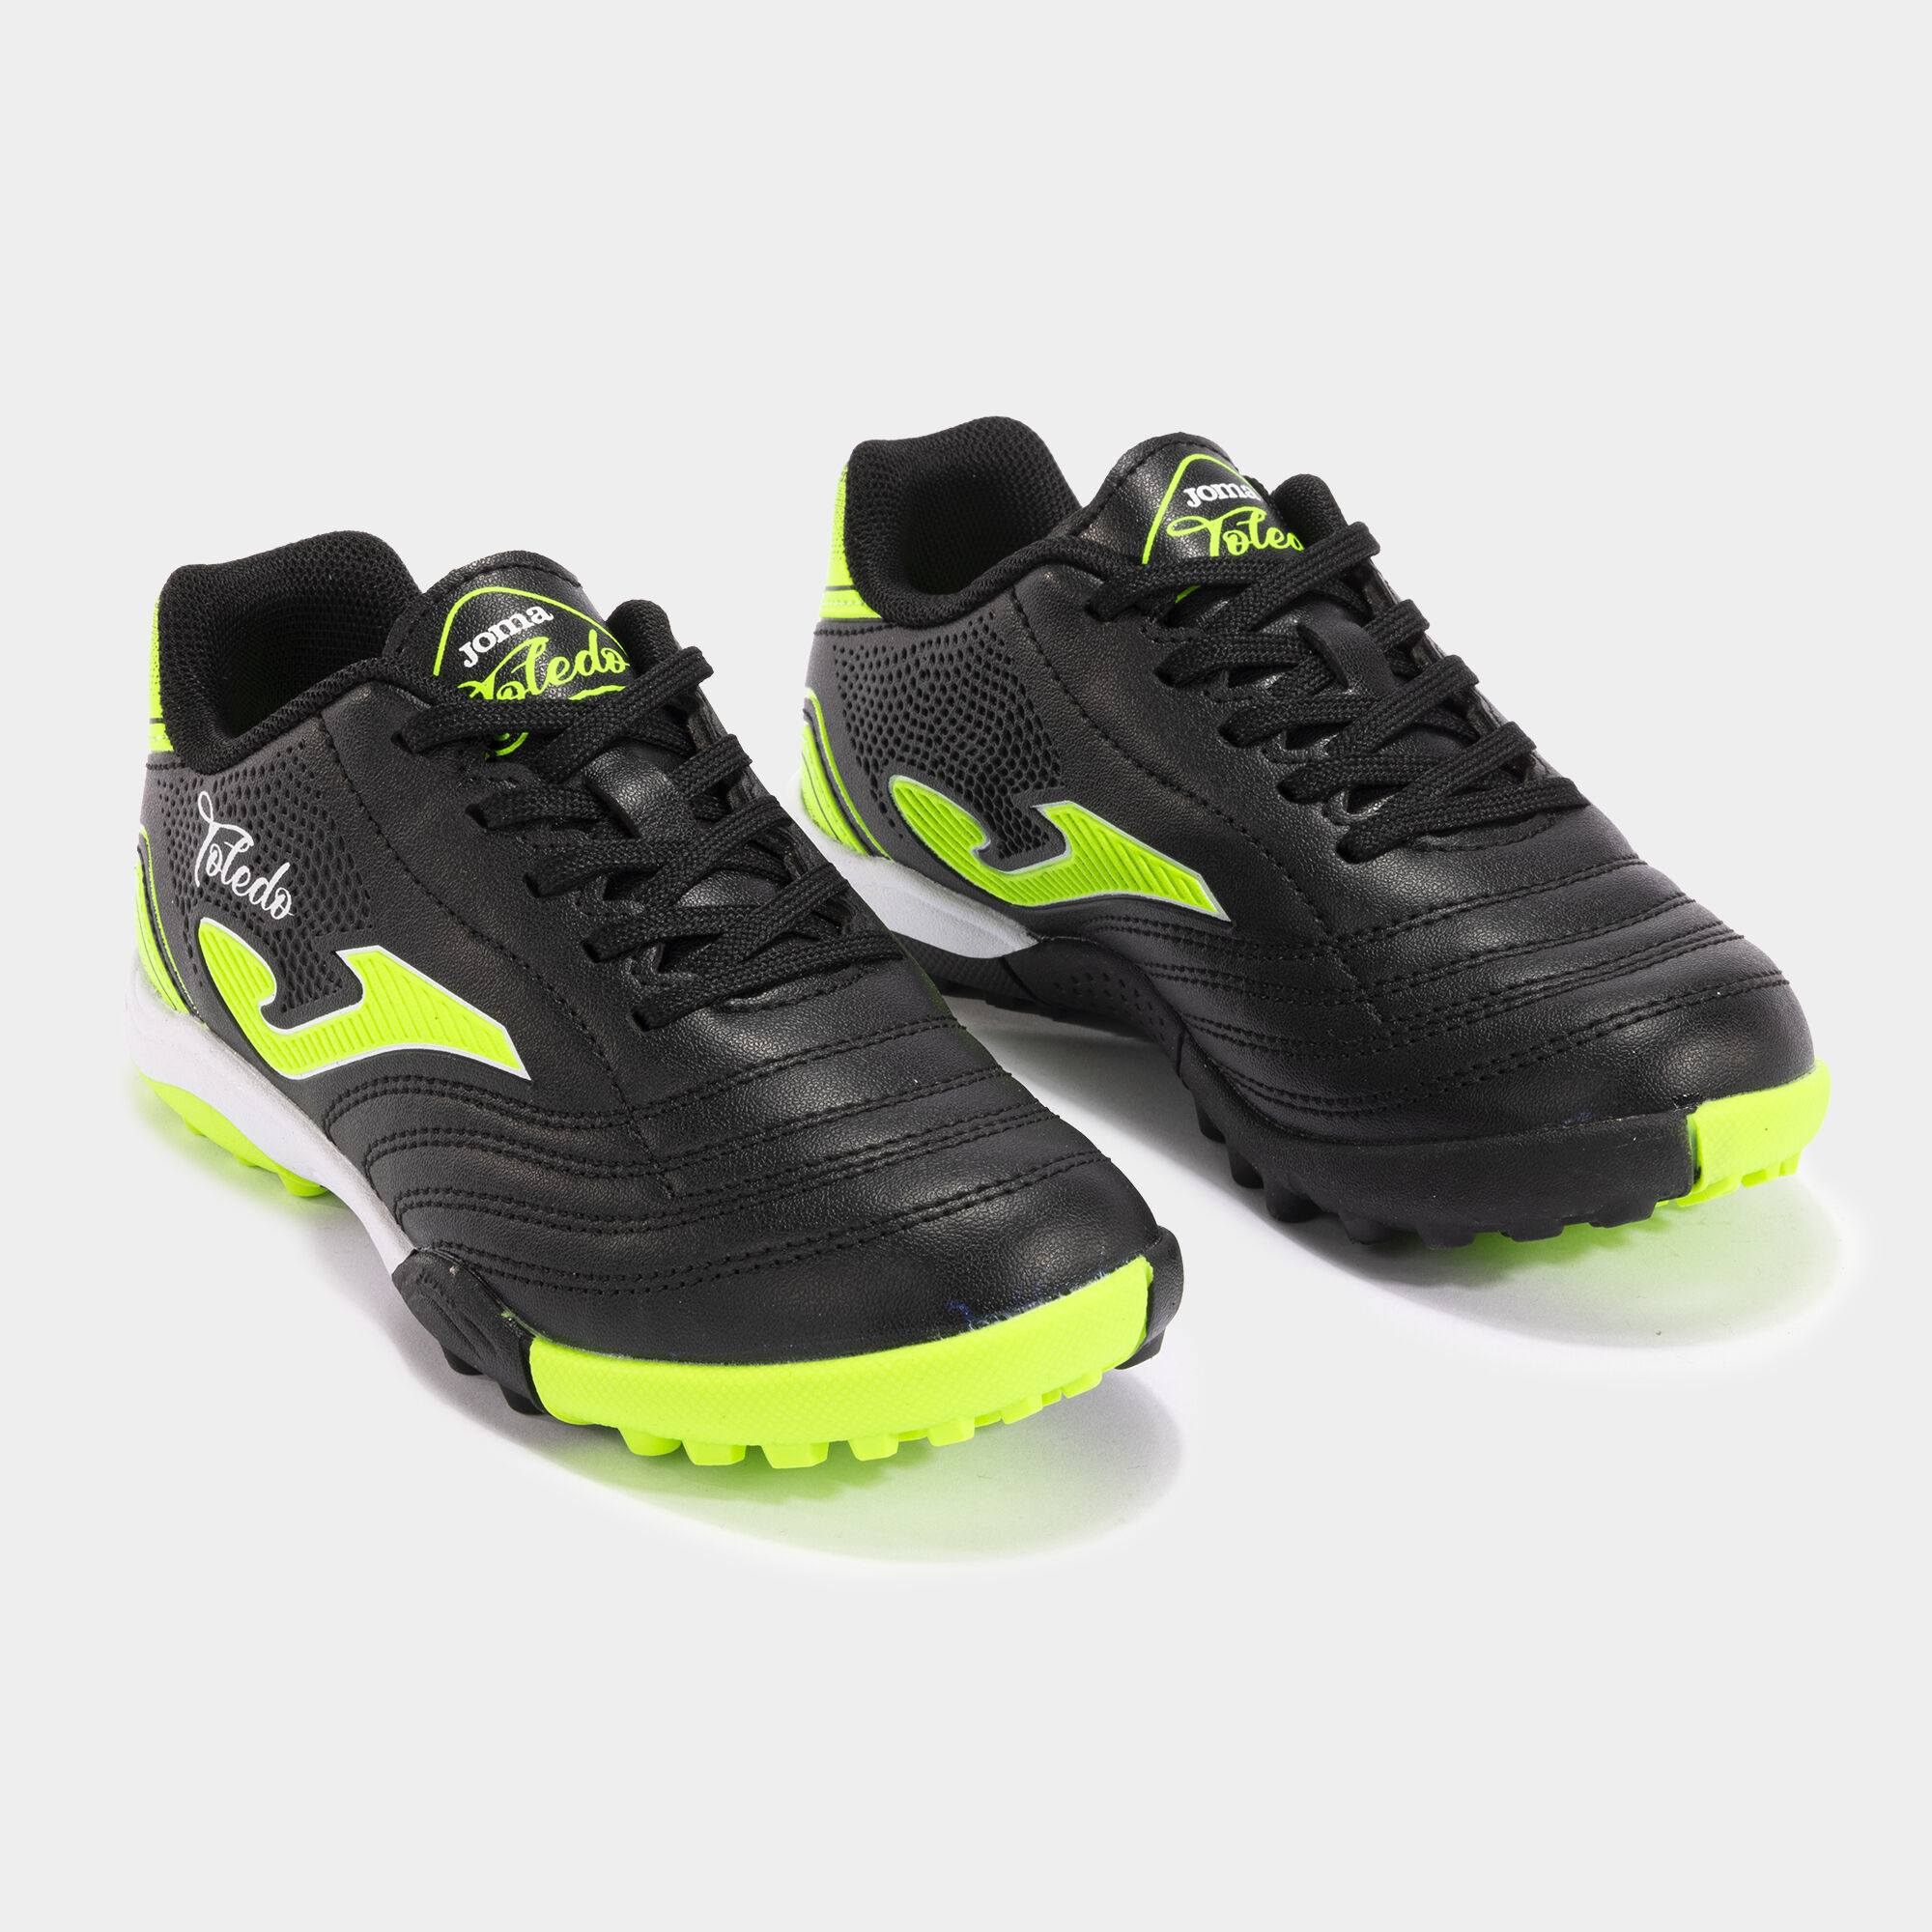 Chaussures football Toledo Jr 24 moquette - turf junior noir vert fluo